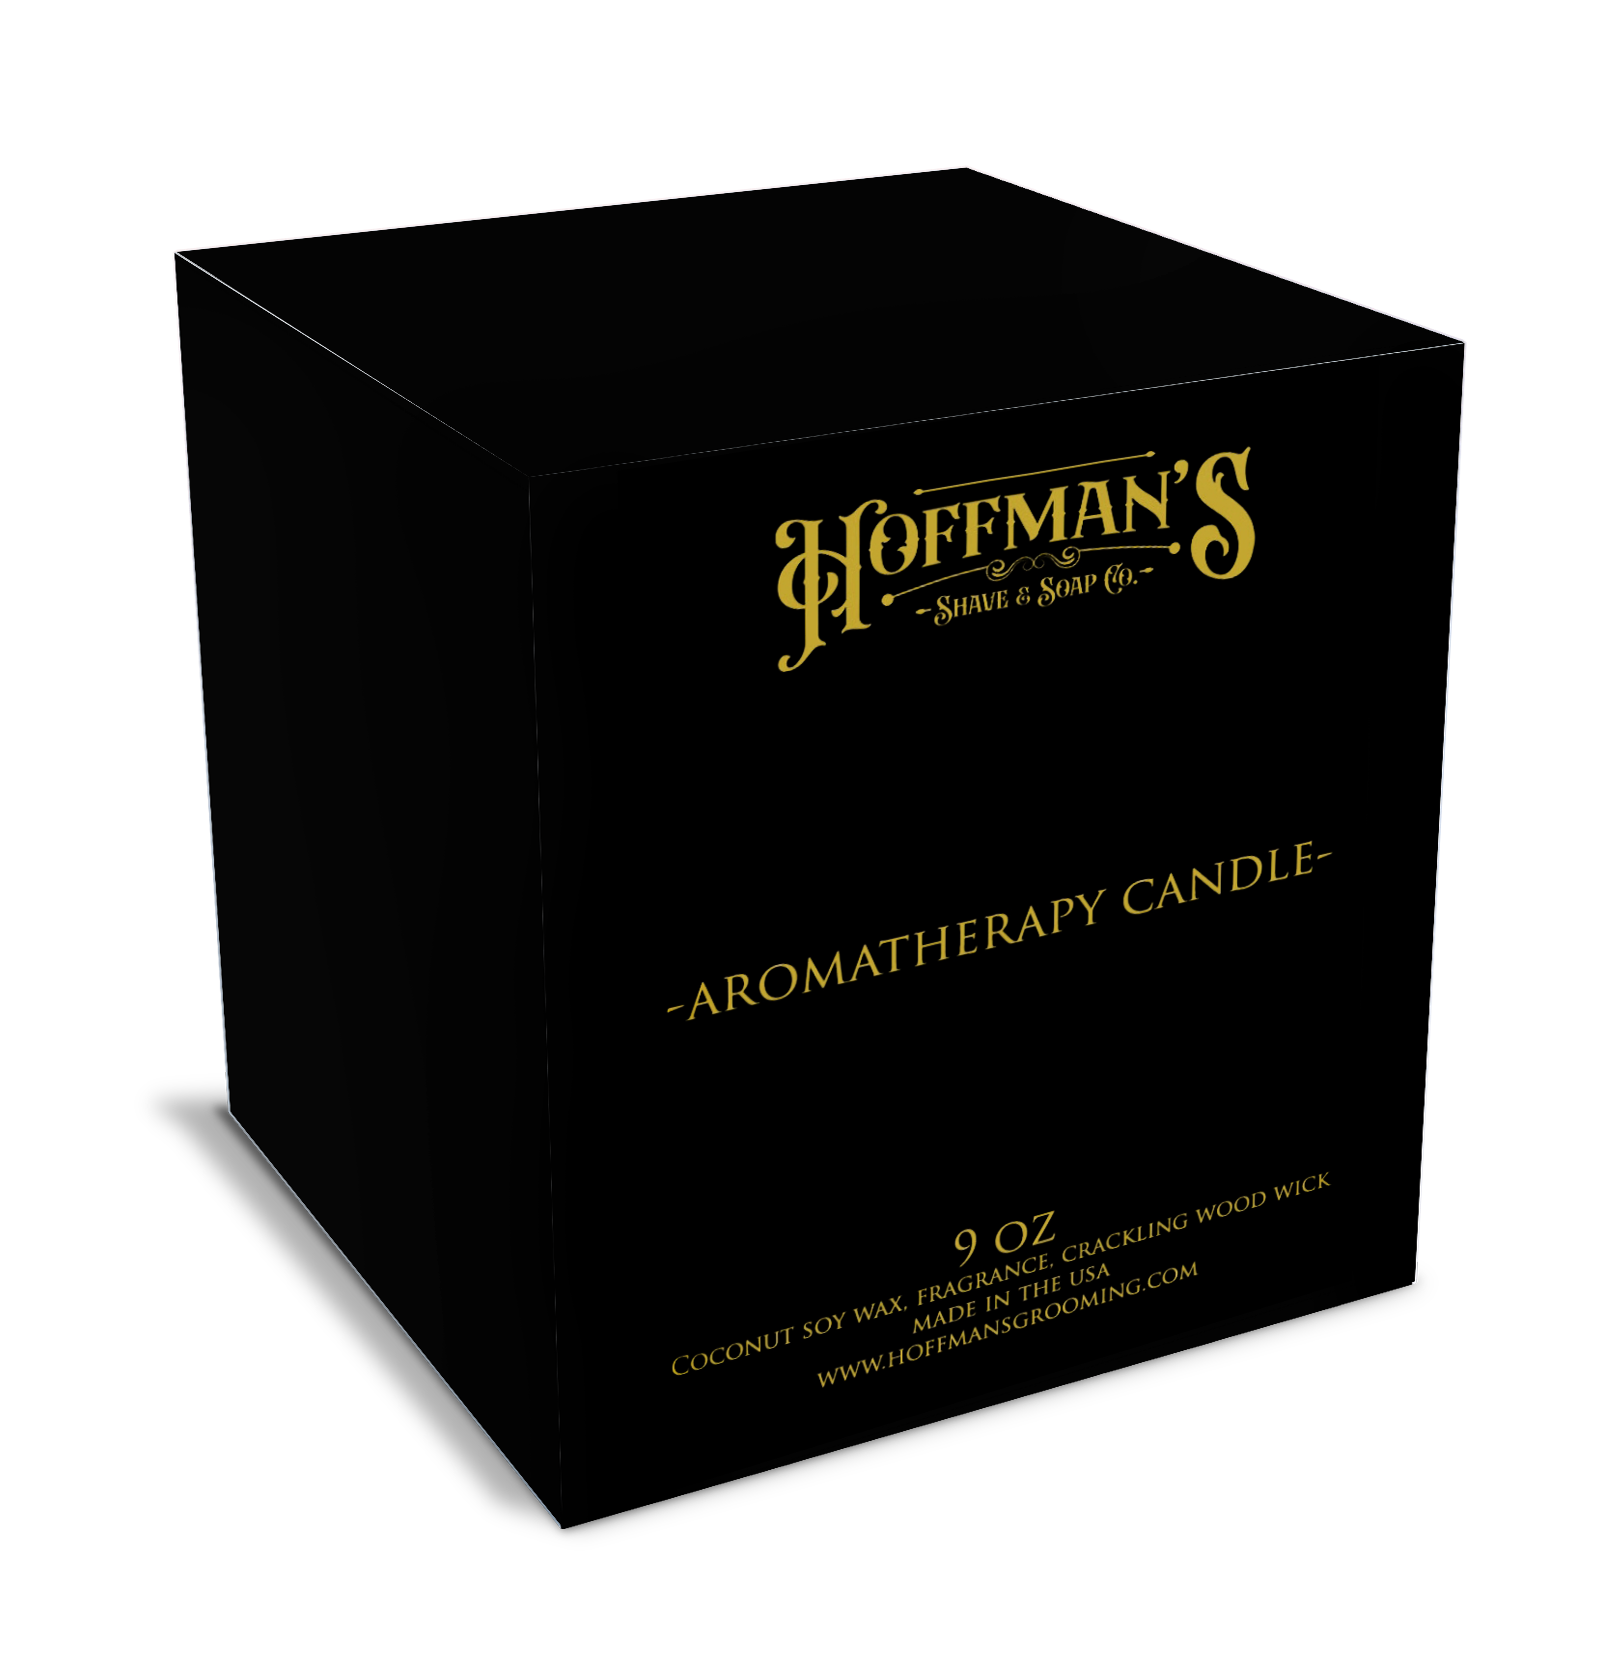 Rio Grande 9oz Aromatherapy Candle Box